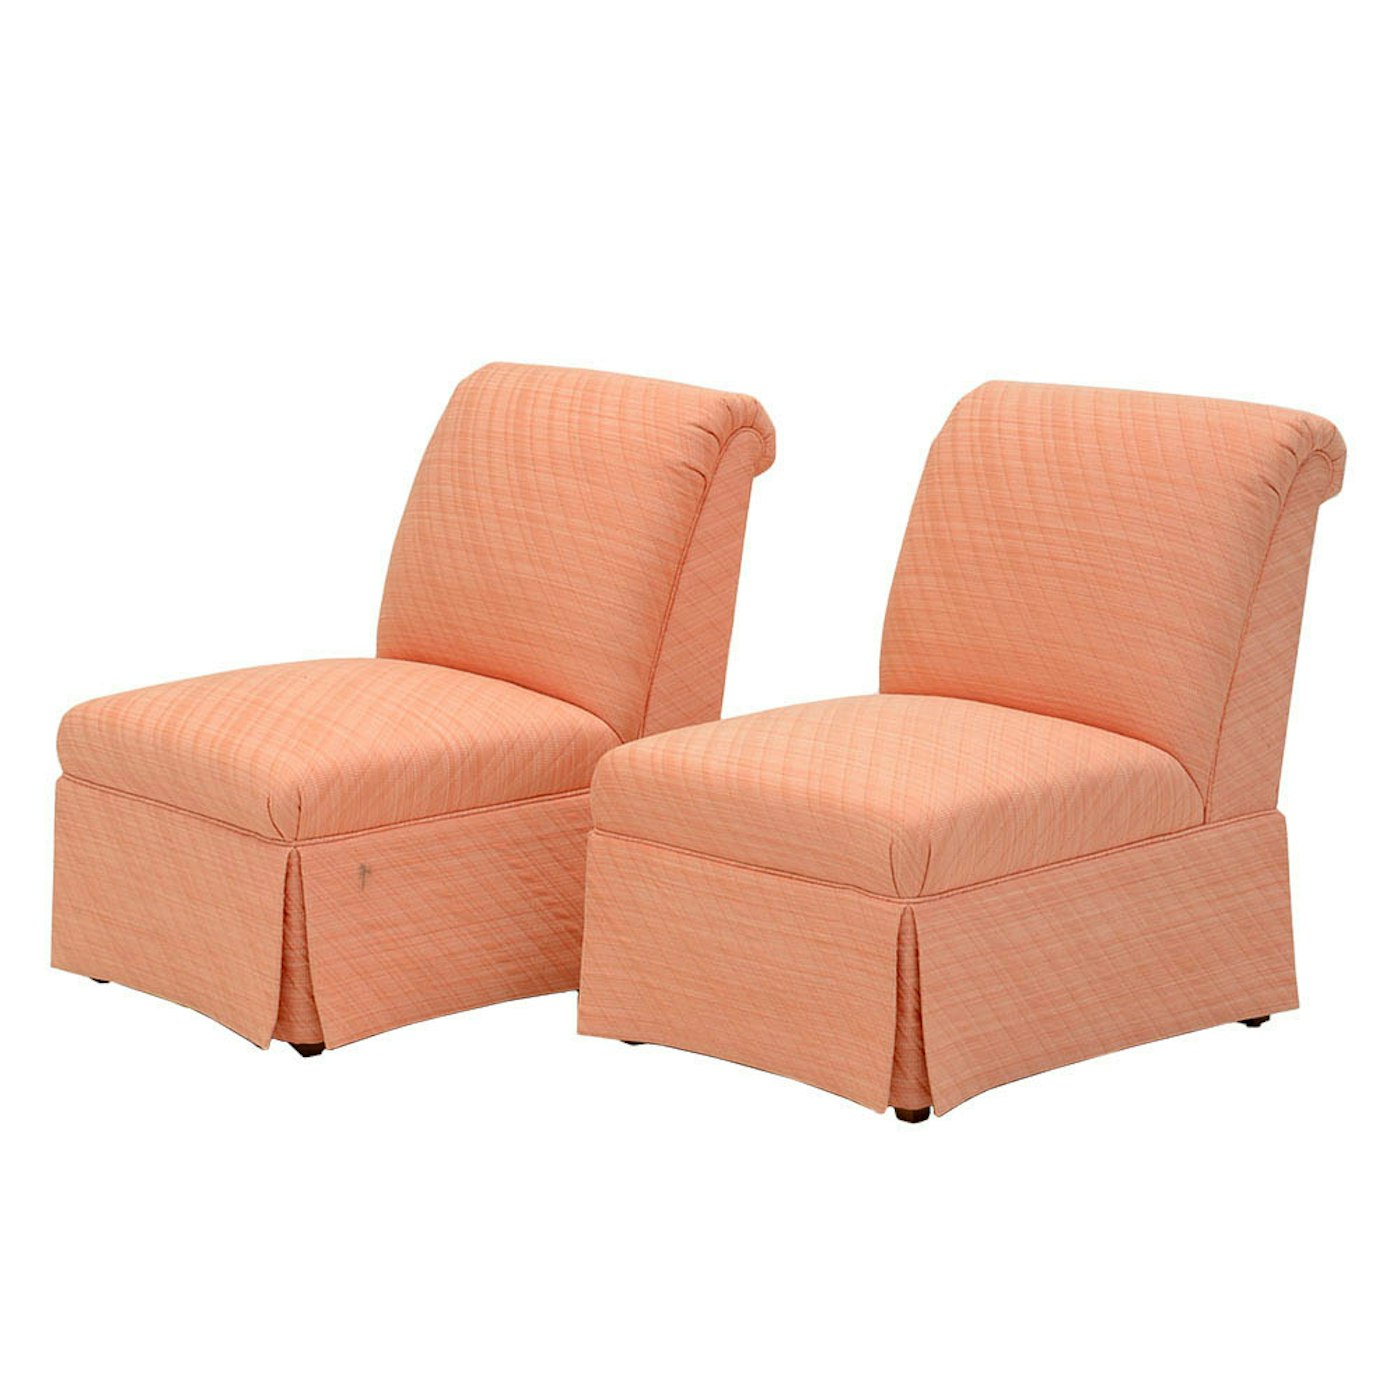 Modern Armless Lounge Chair : Empress Modern Upholstered Lounge Chair